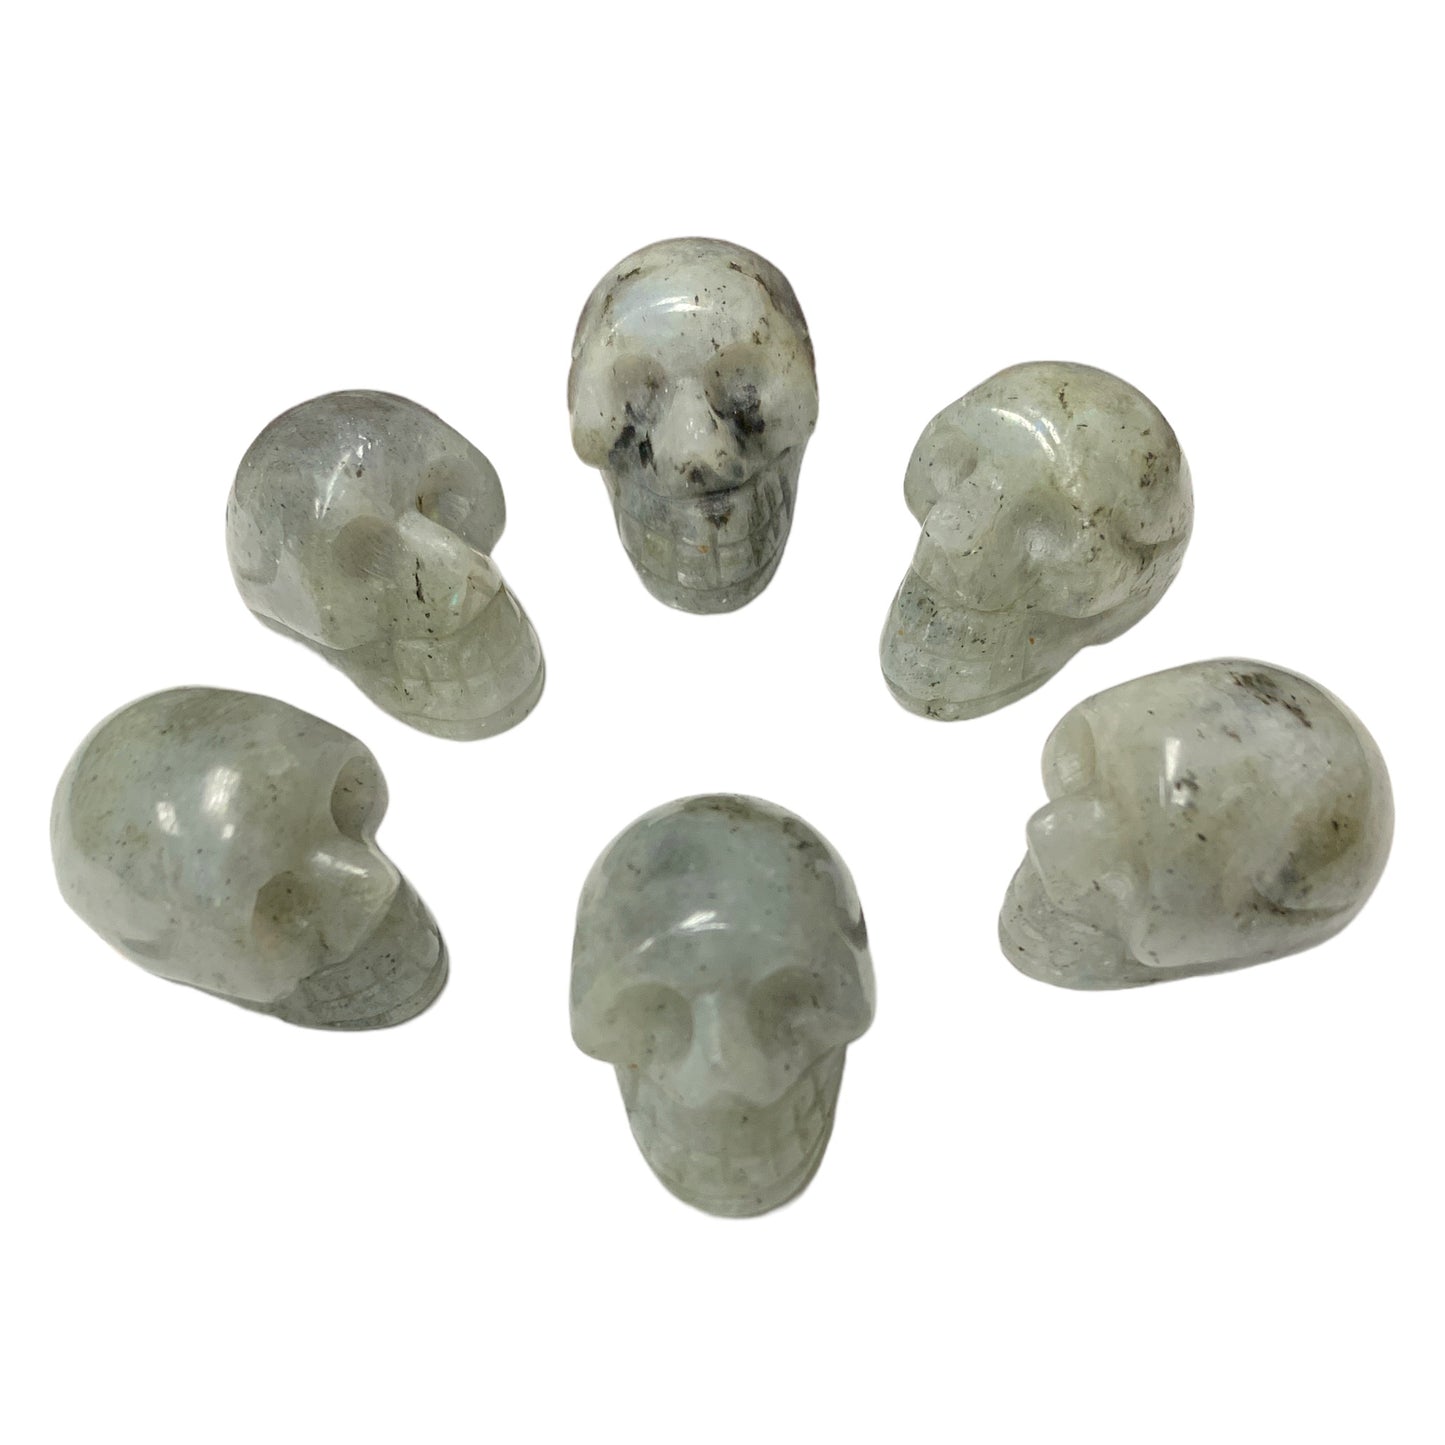 Skull Mini - Labradorite - 30-35mm Grams - China - NEW722